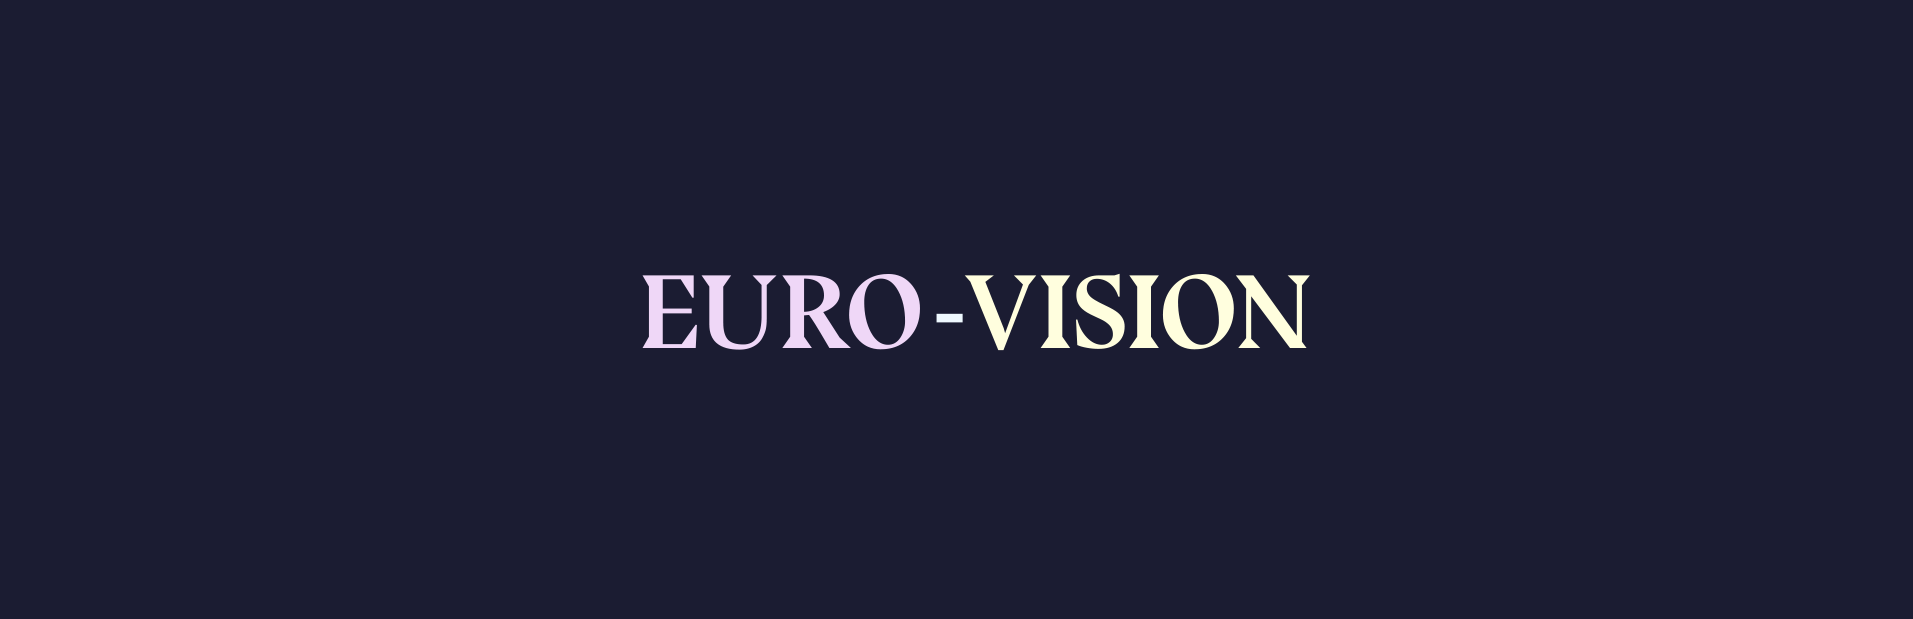 Euro-Vision Collaboration on Behance7926a880381243.5ce00e171e0d9.png